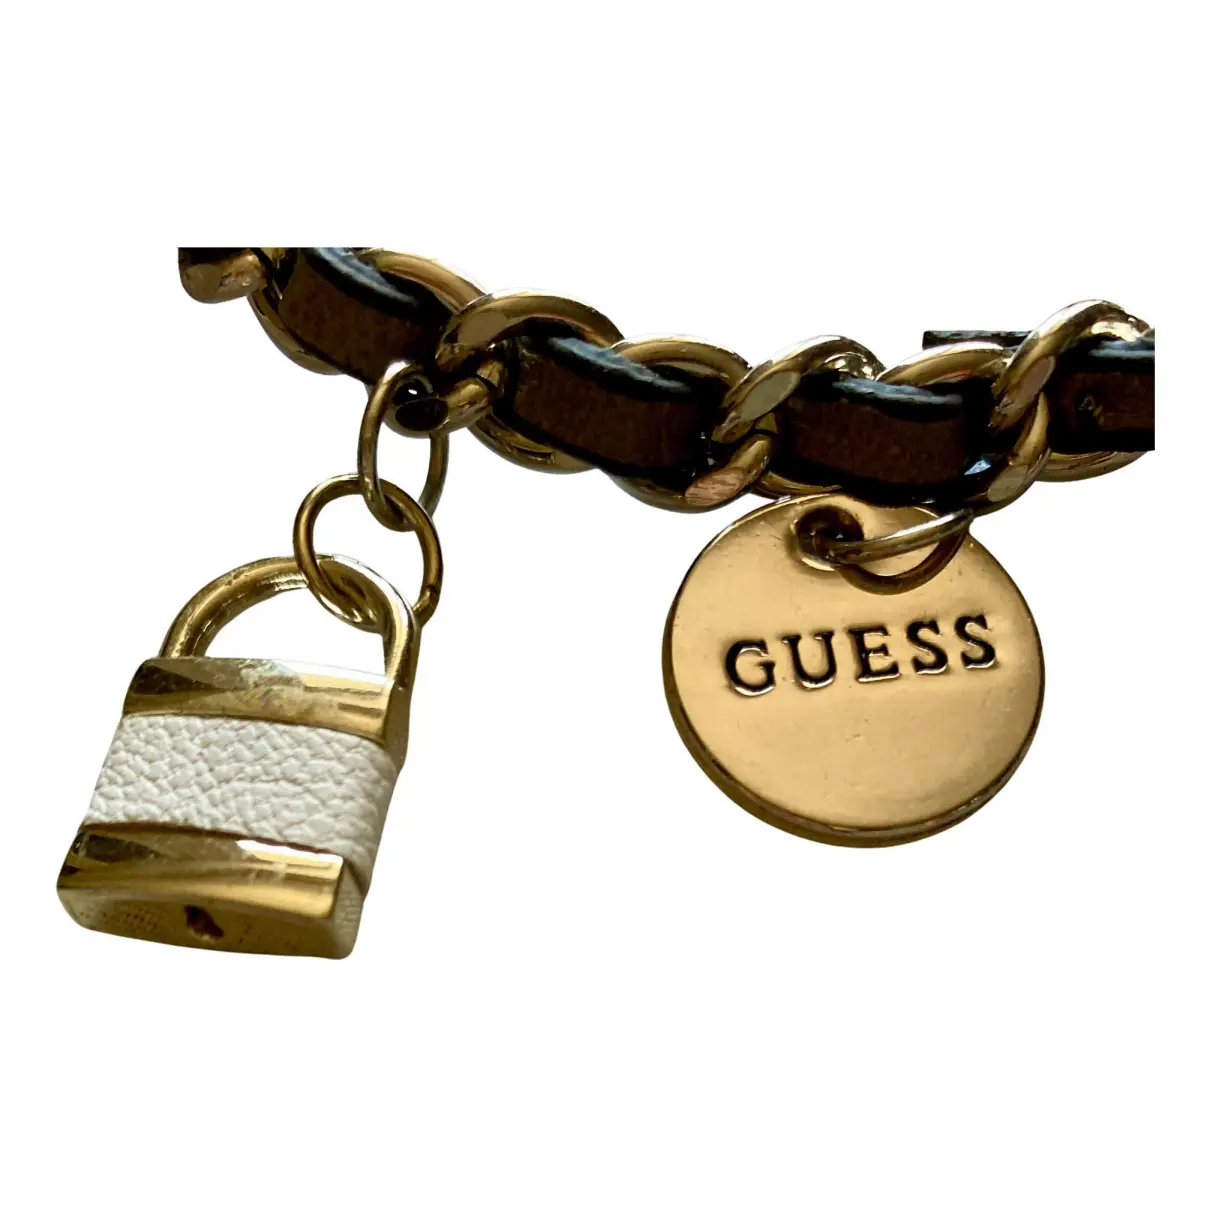 Buy GUESS Bracelet online